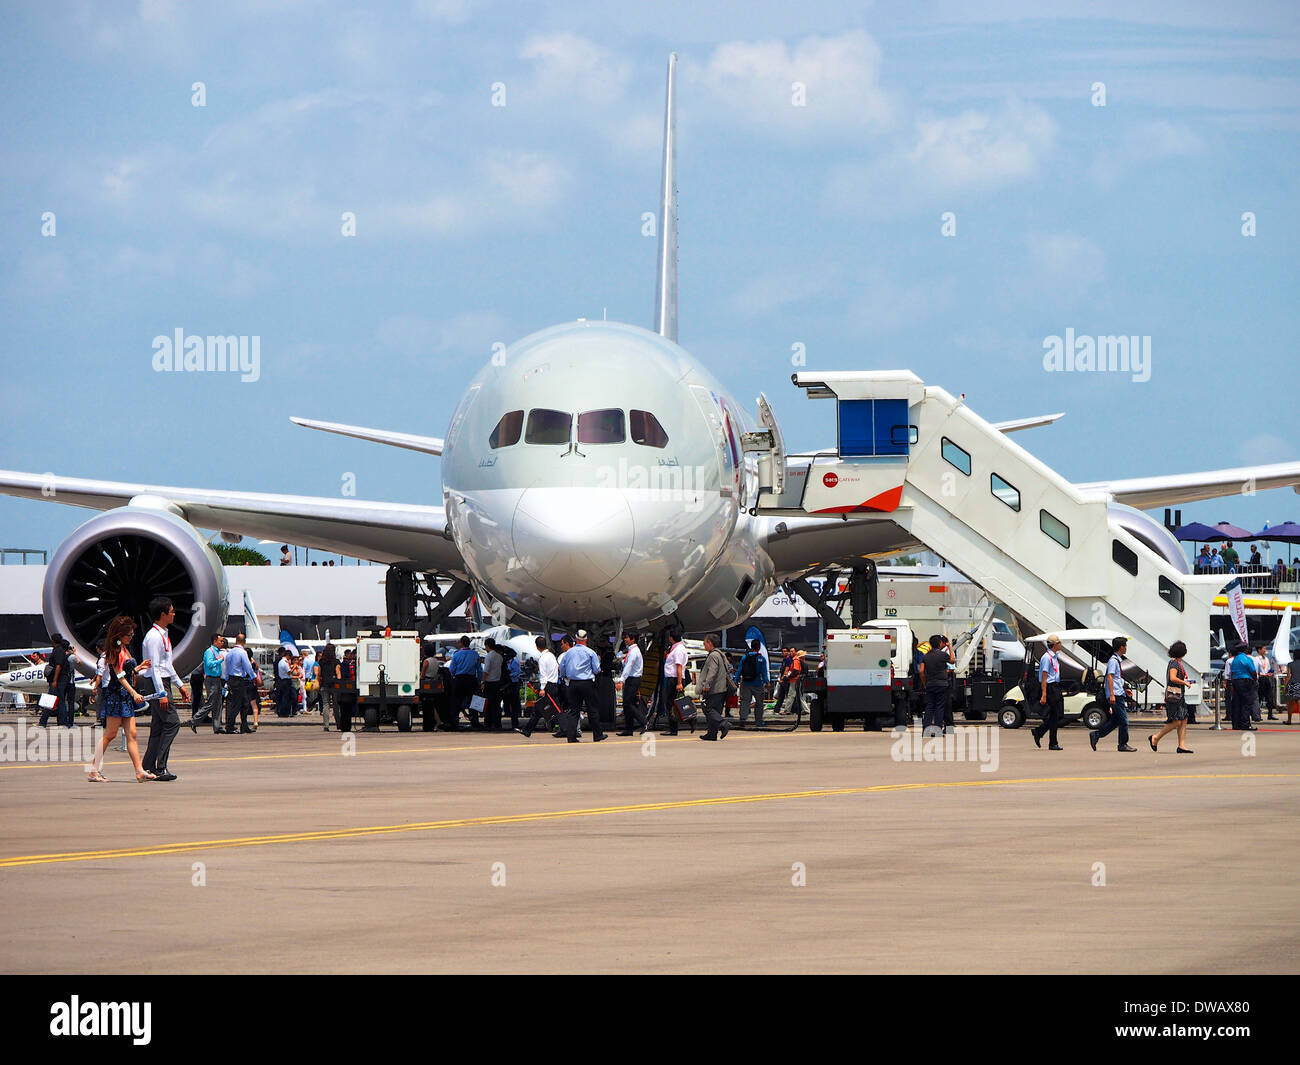 Qatar Airways' Boeing 787 Dreamliner at the 2014 Singapore Airshow Stock Photo